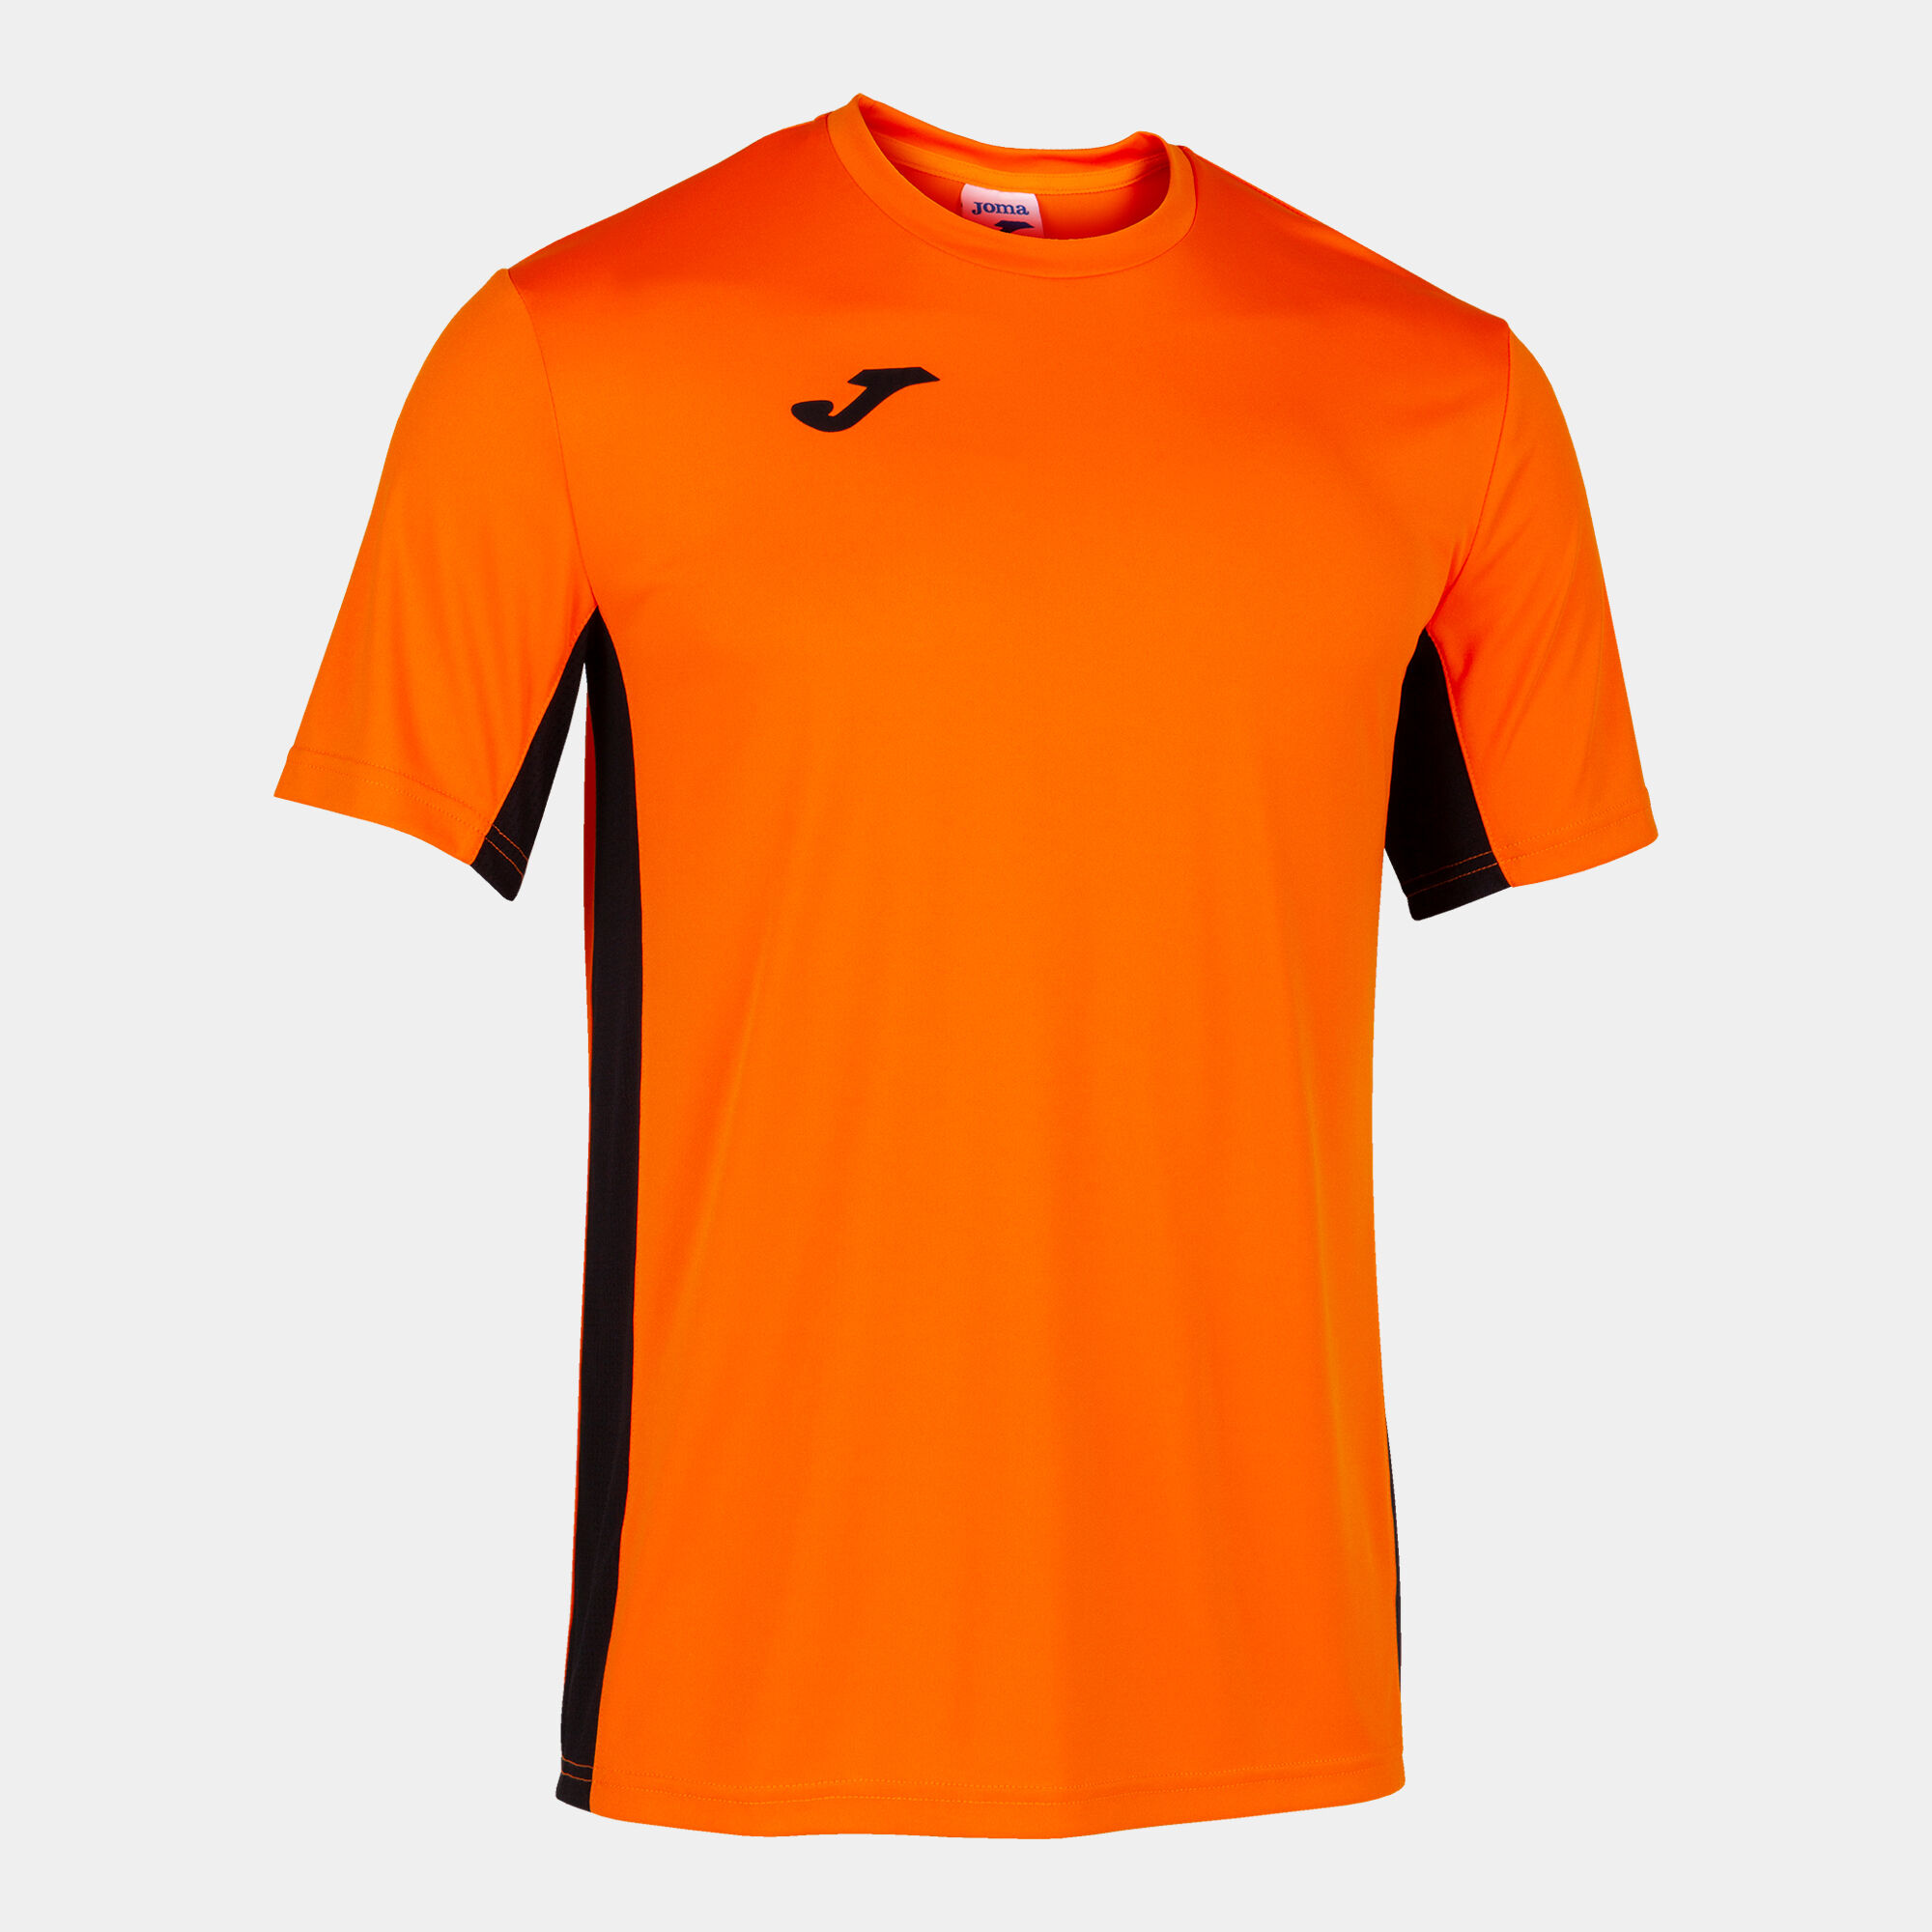 T-shirt manga curta homem Cosenza laranja preto